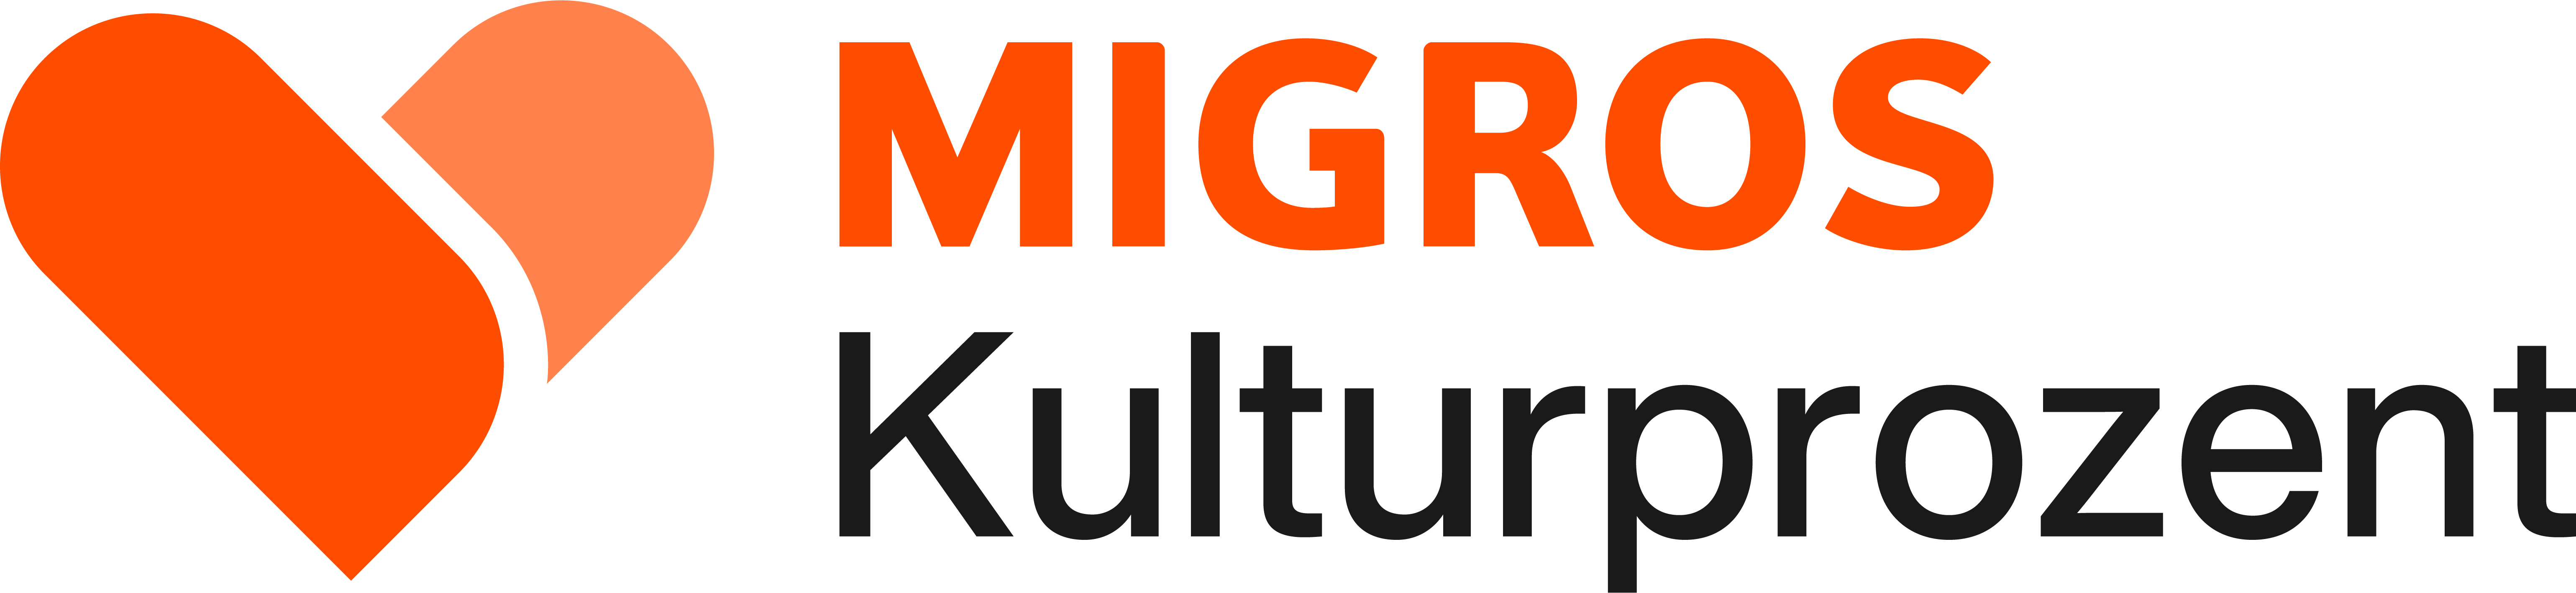 Migros_Kulturprozent